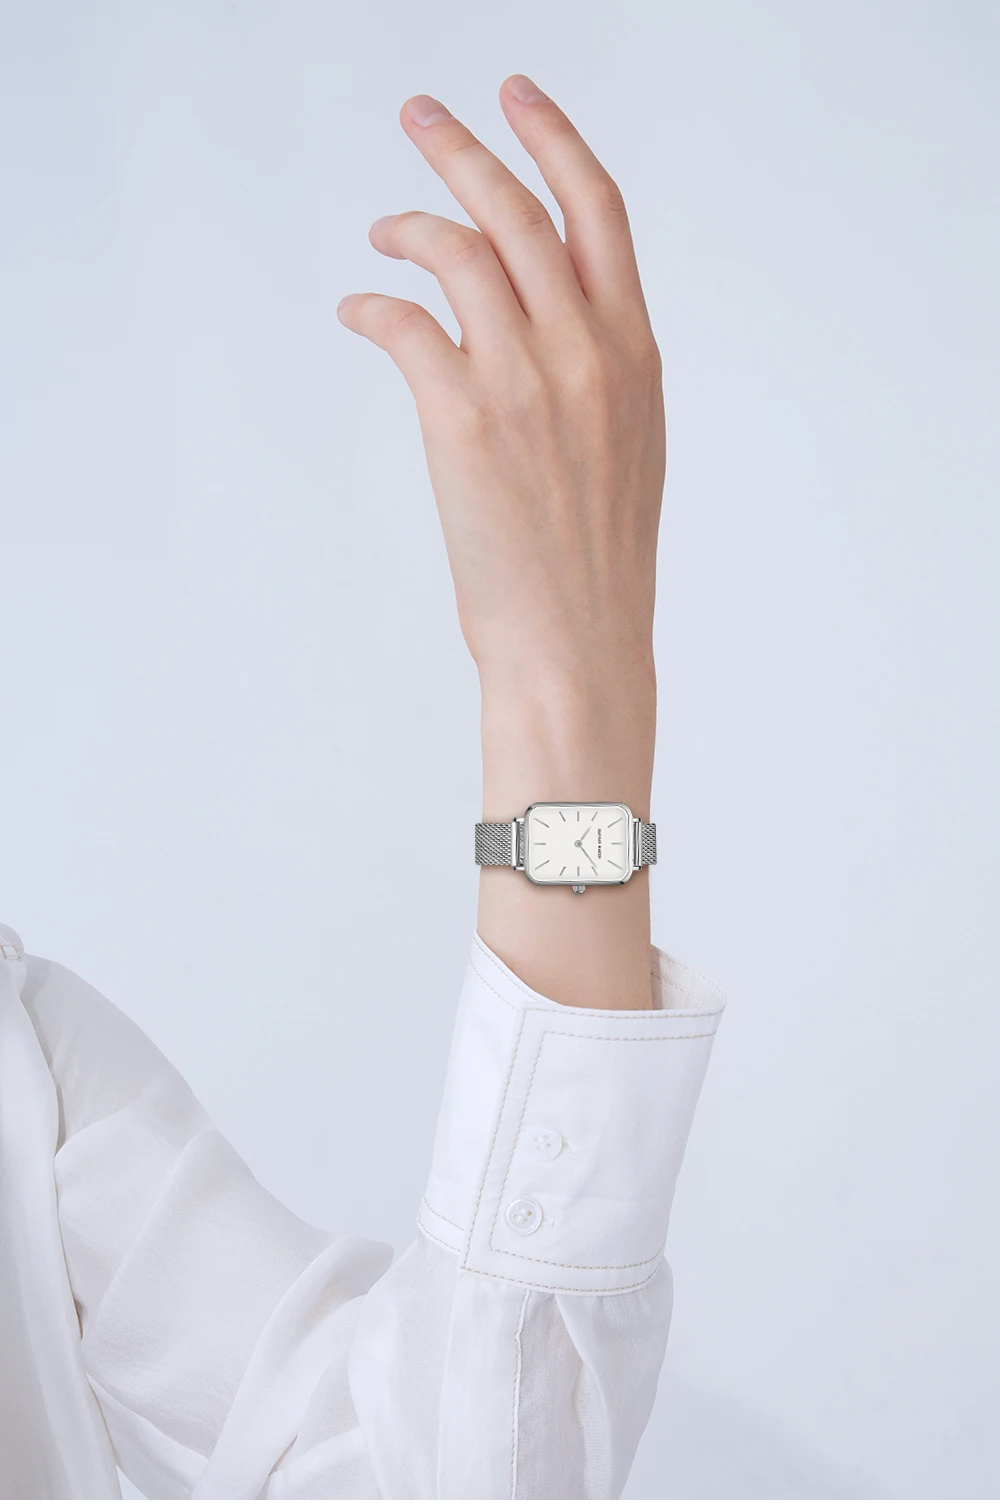 Rectangle Ultrathin Nordic Bauhaus Simple Design Japan Quartz Lady Fashion Stainless Steel Mesh Bracelet Belt Watches for Women -H5904528e35754f549f19a5004747b55aL